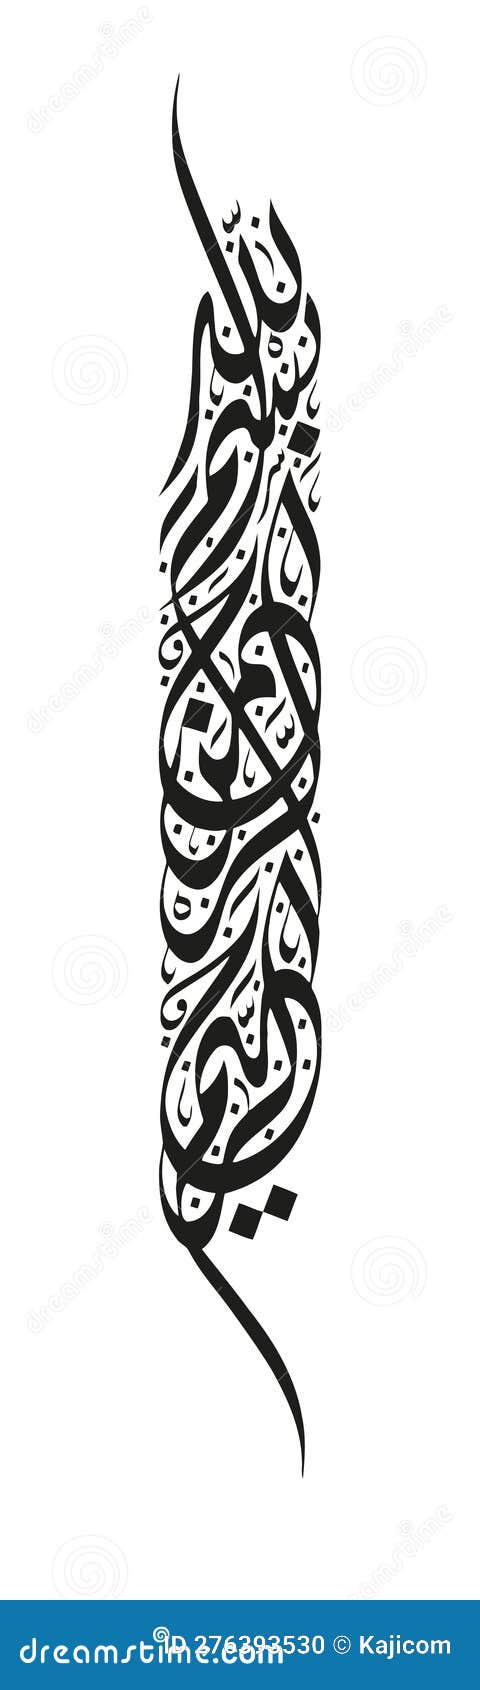 Name of God in Arabic Islamic Calligraphy Vector. Stock Vector ...